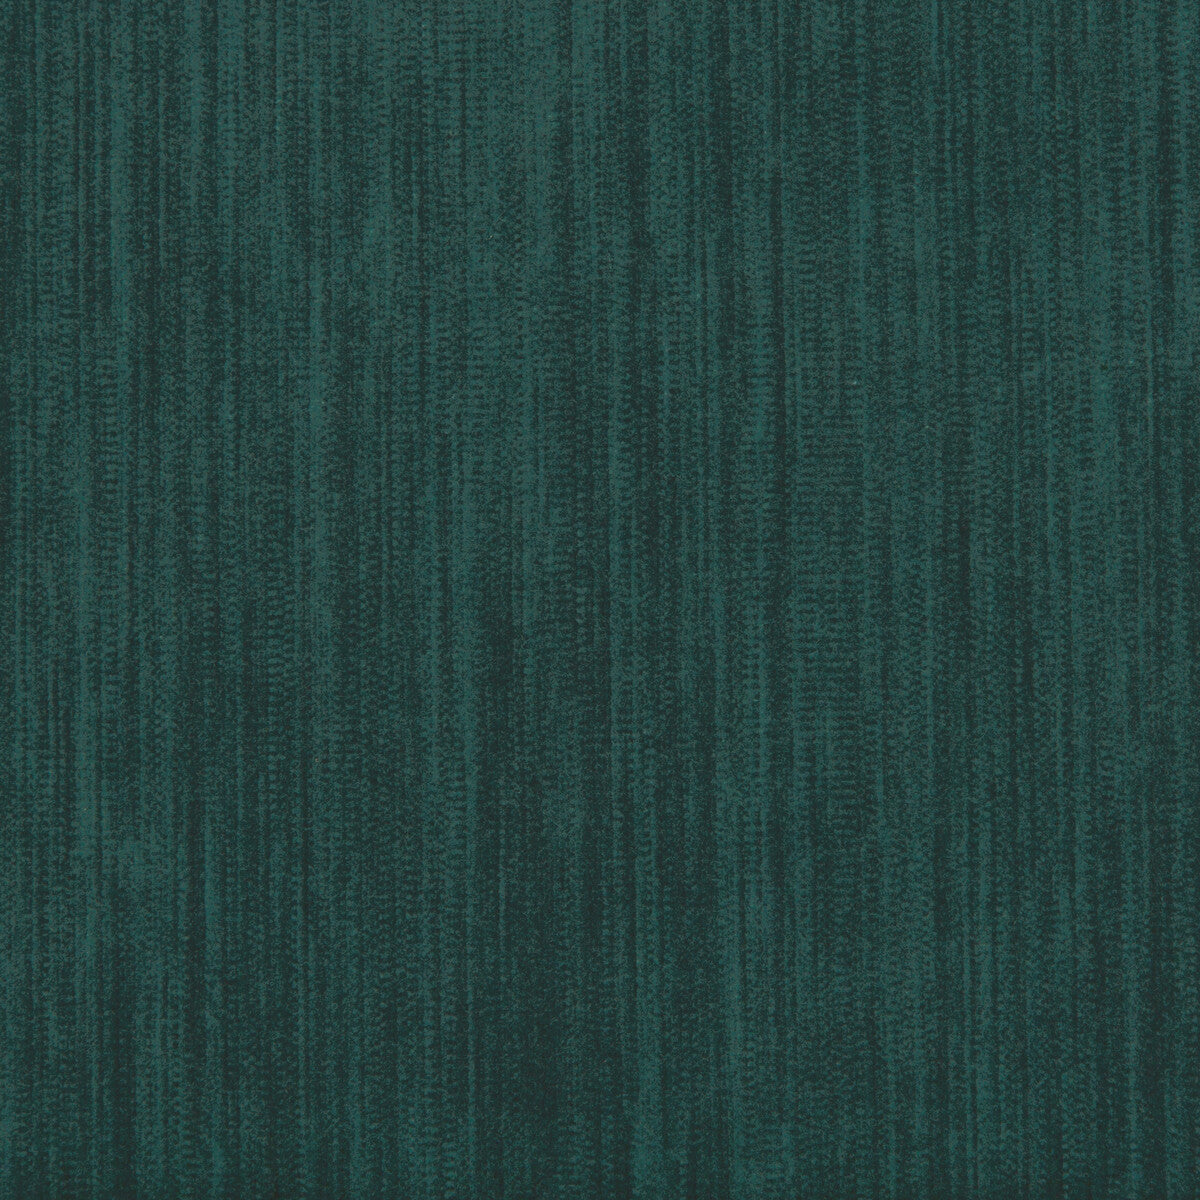 Barnwell Velvet fabric in aegean color - pattern 2020180.35.0 - by Lee Jofa in the Barnwell Velvet collection